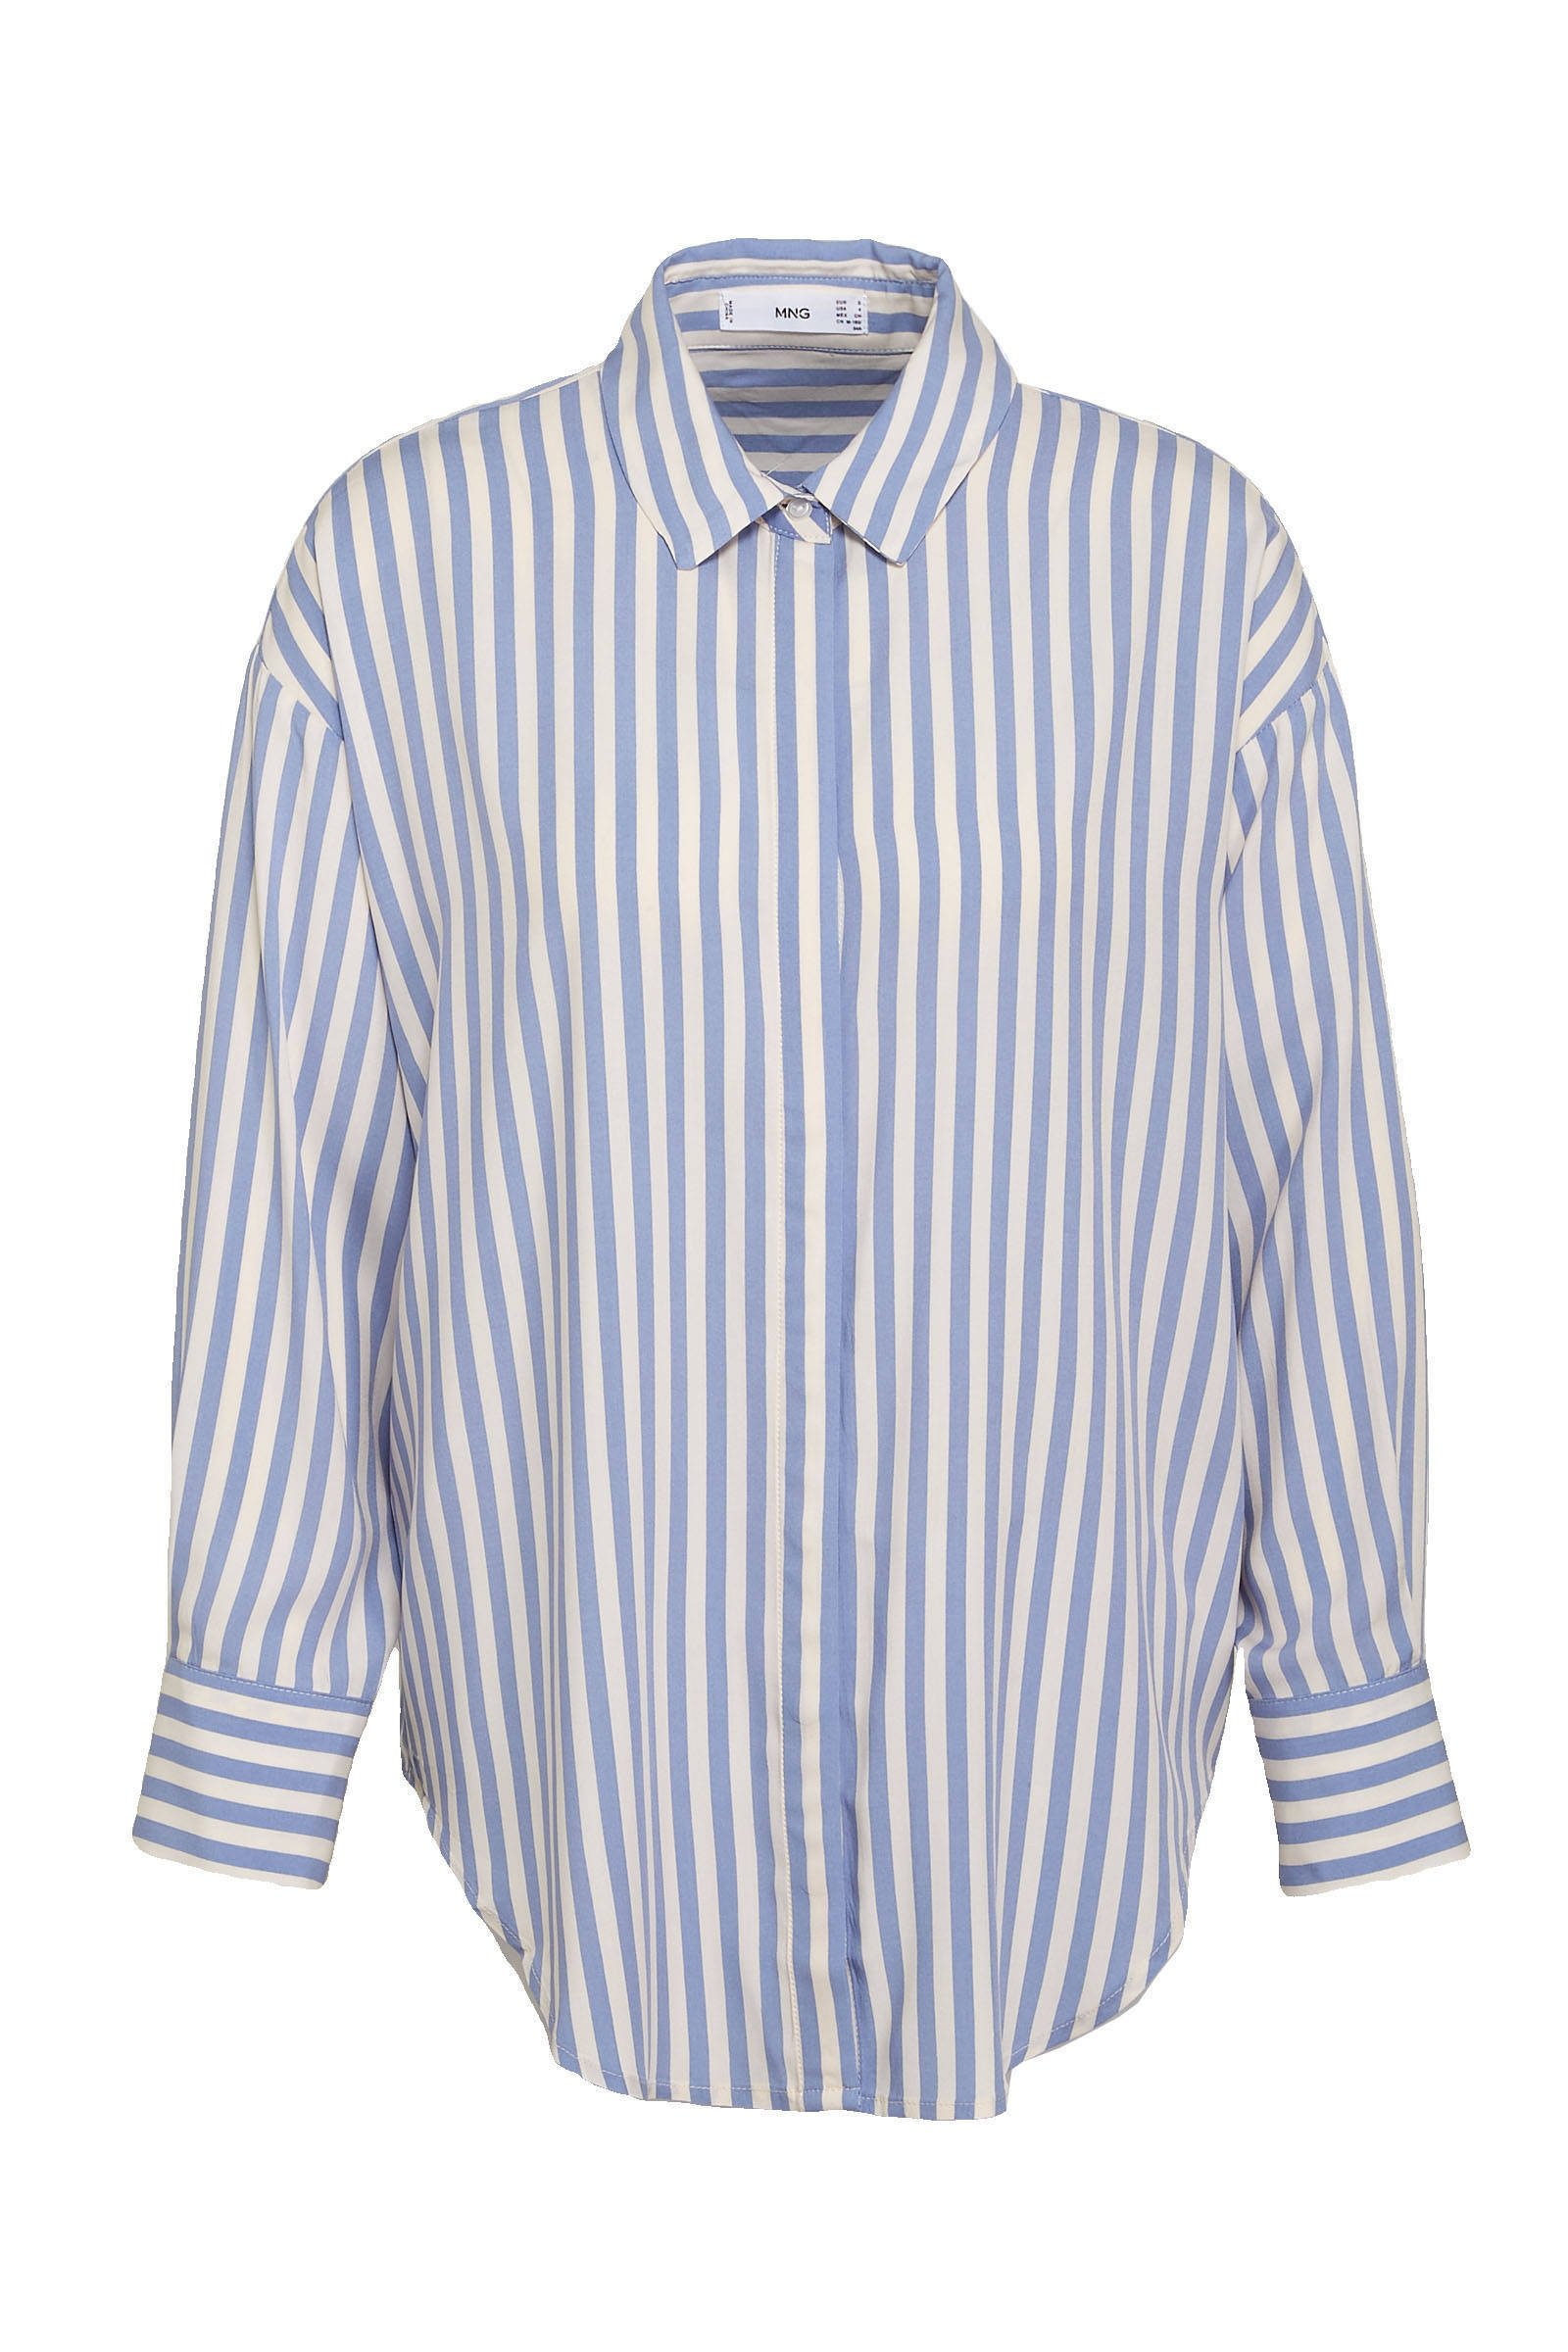 Mode Blouses Oversized blouses Mango Suit Oversized blouse wit-blauw gestreept patroon straat-mode uitstraling 